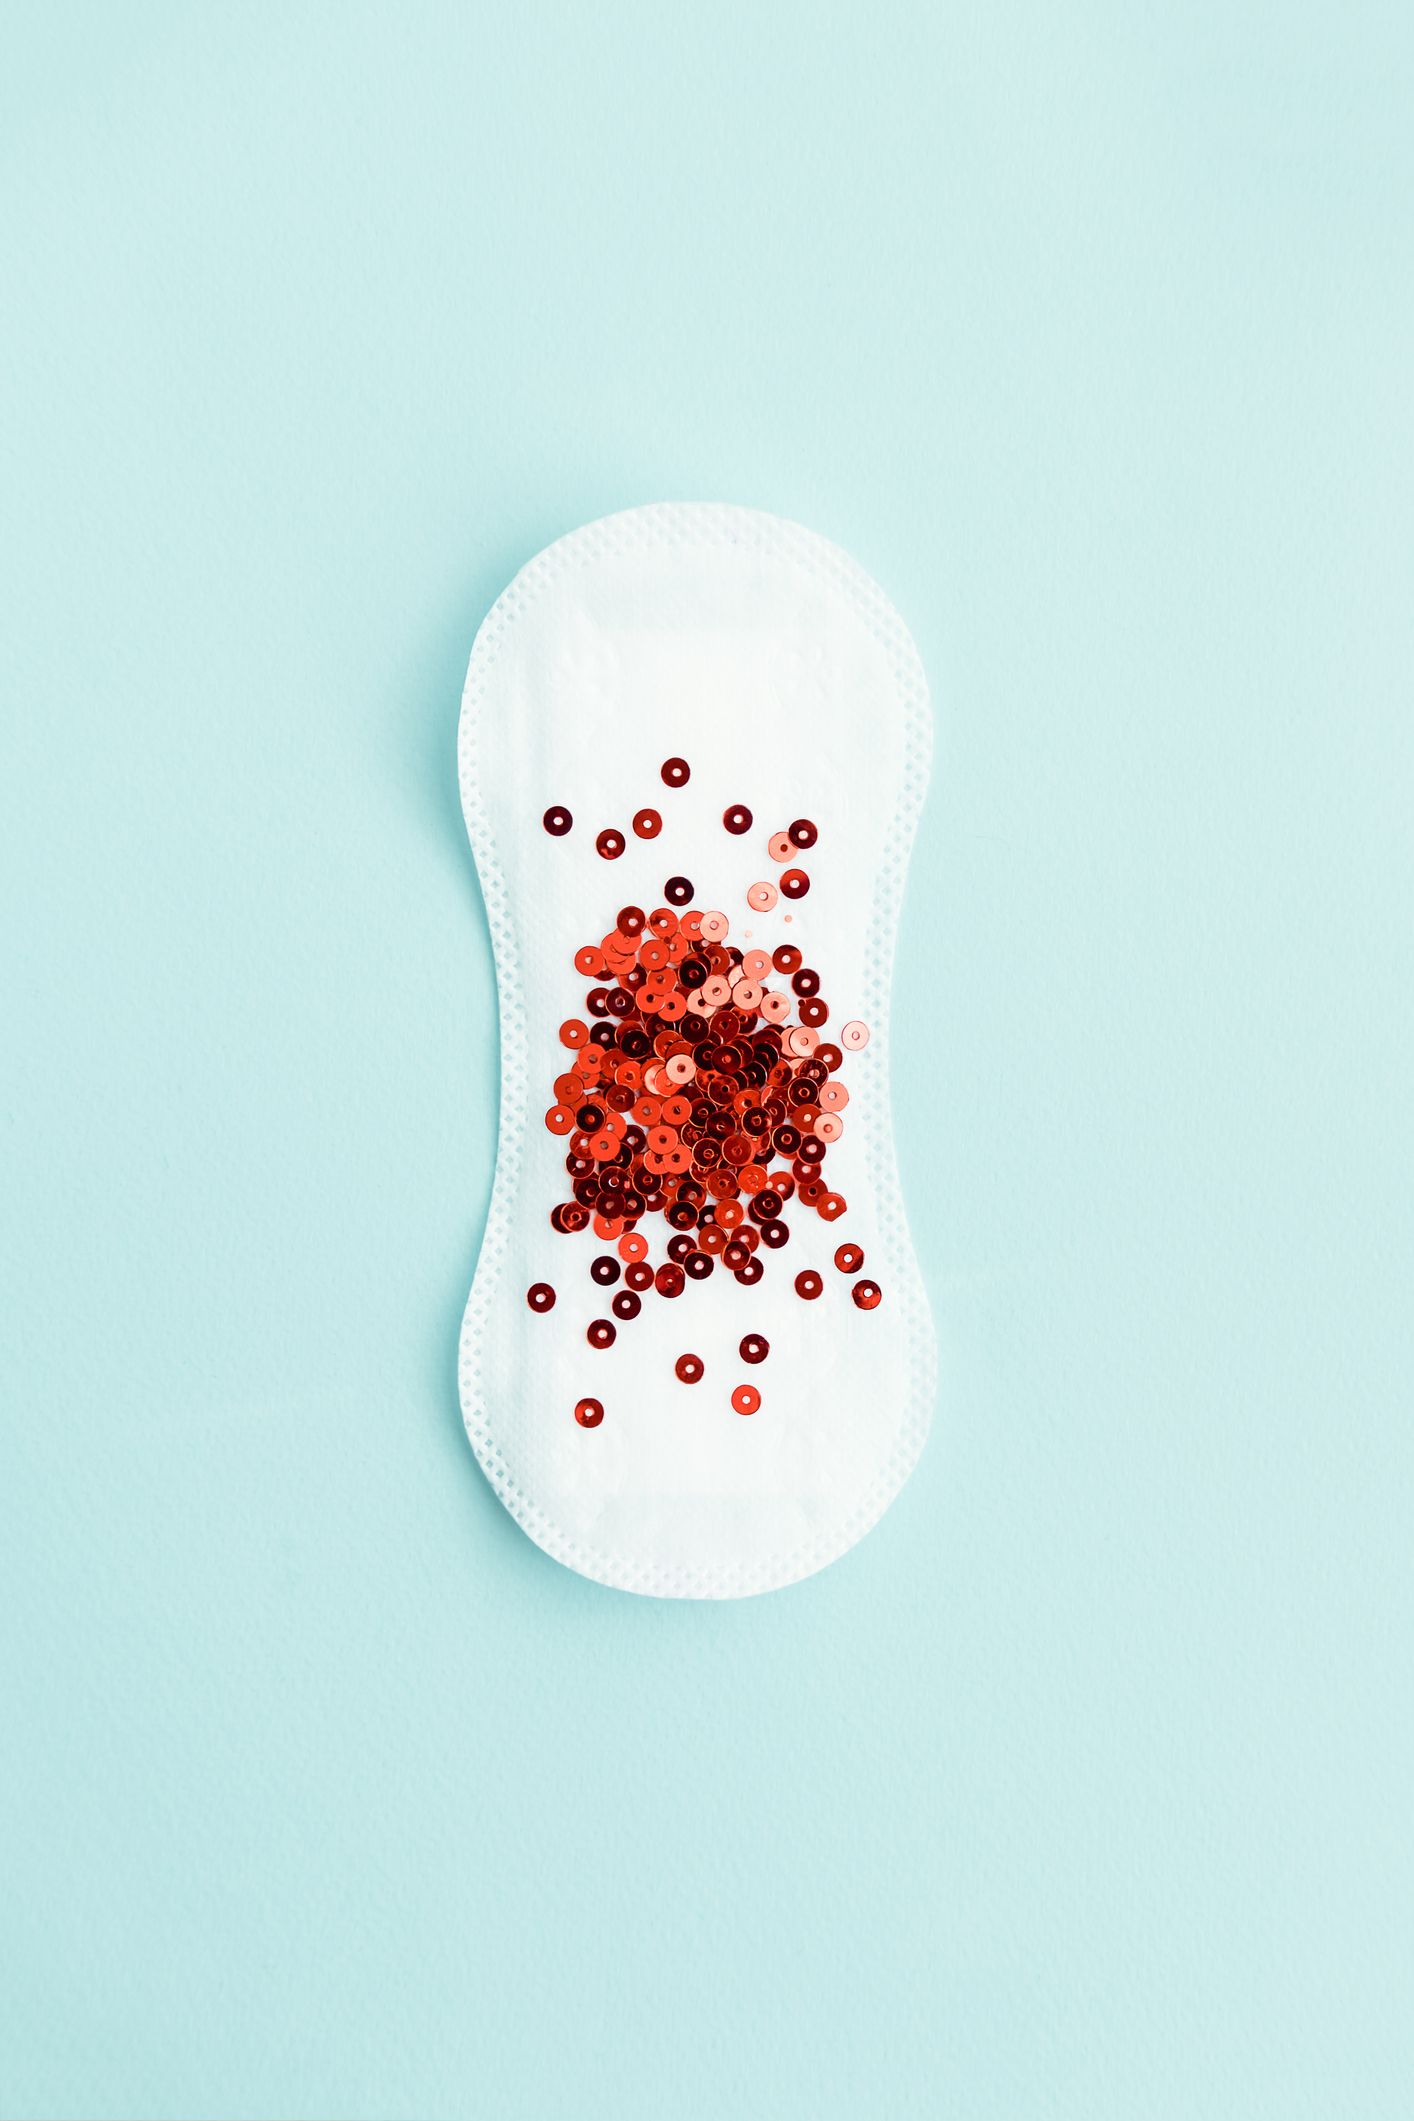 clots during menstruation